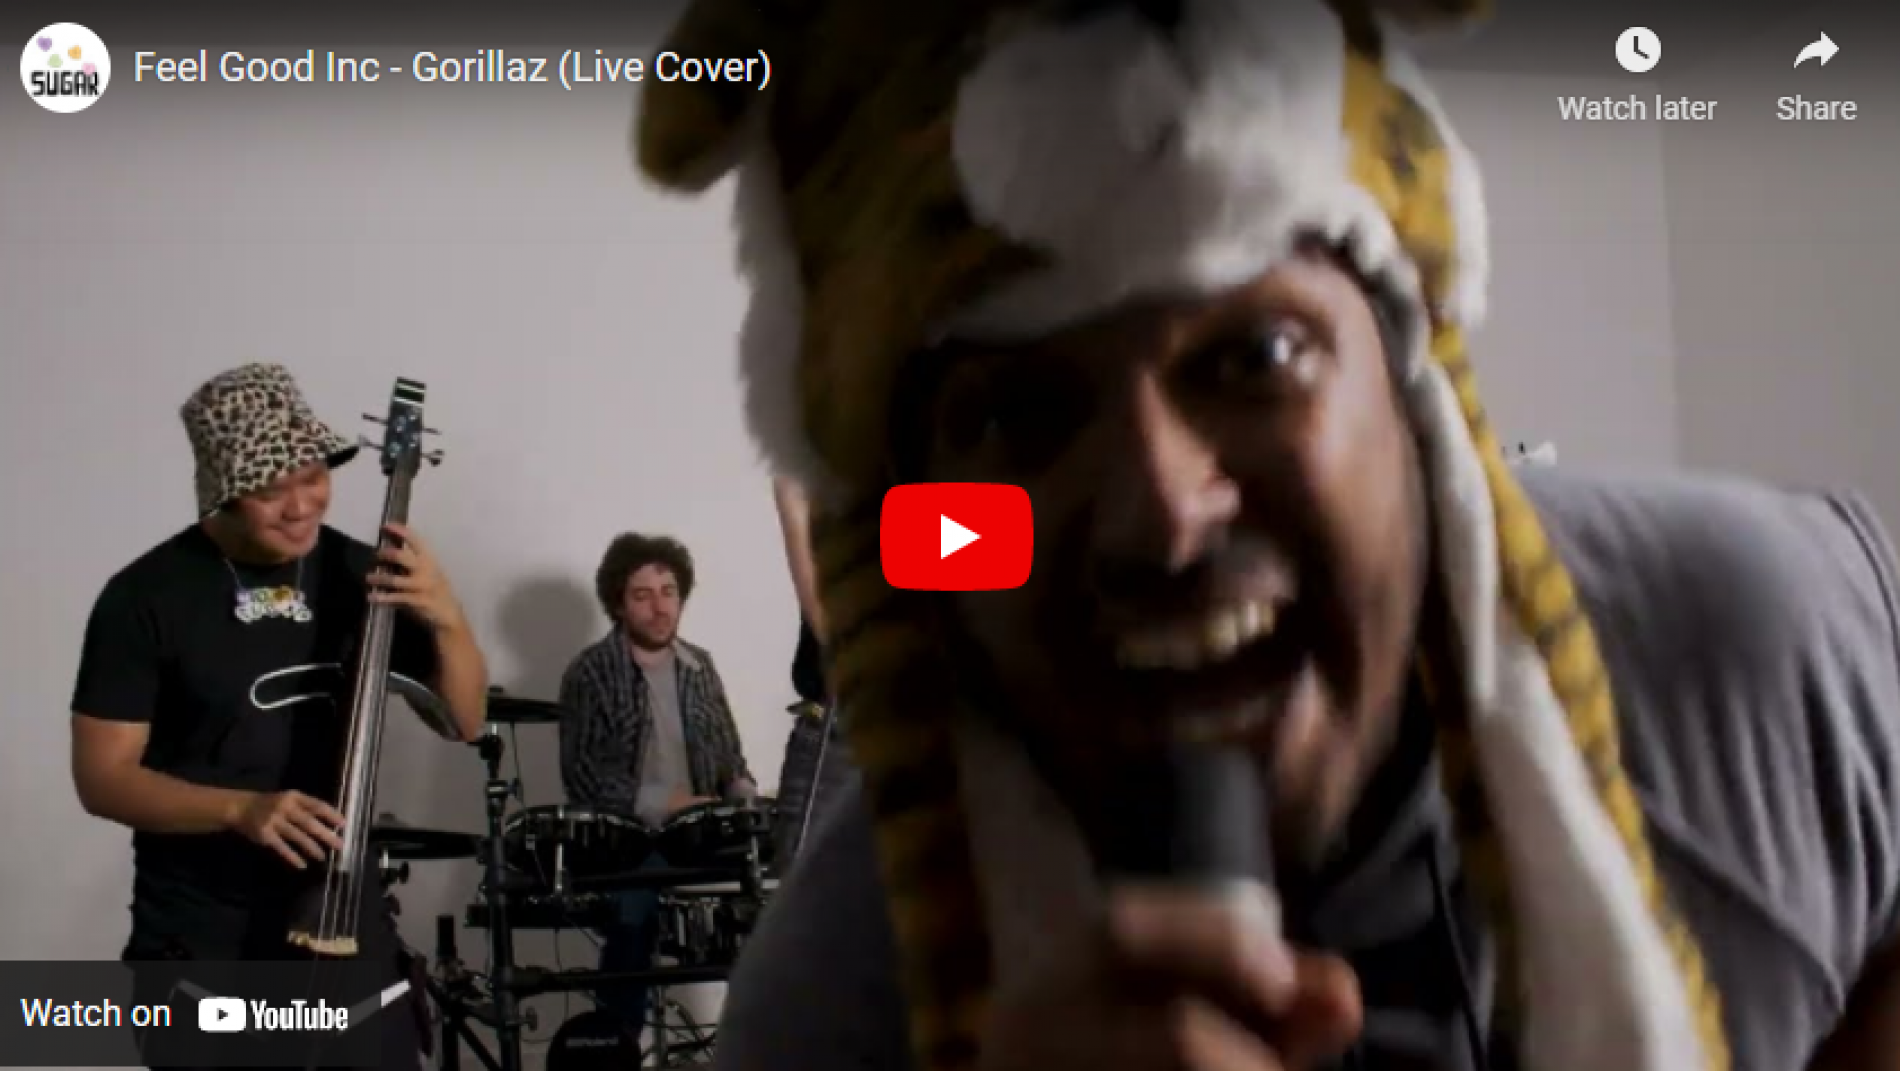 New Music : More Sugar – Feel Good Inc – Gorillaz (Live Cover)